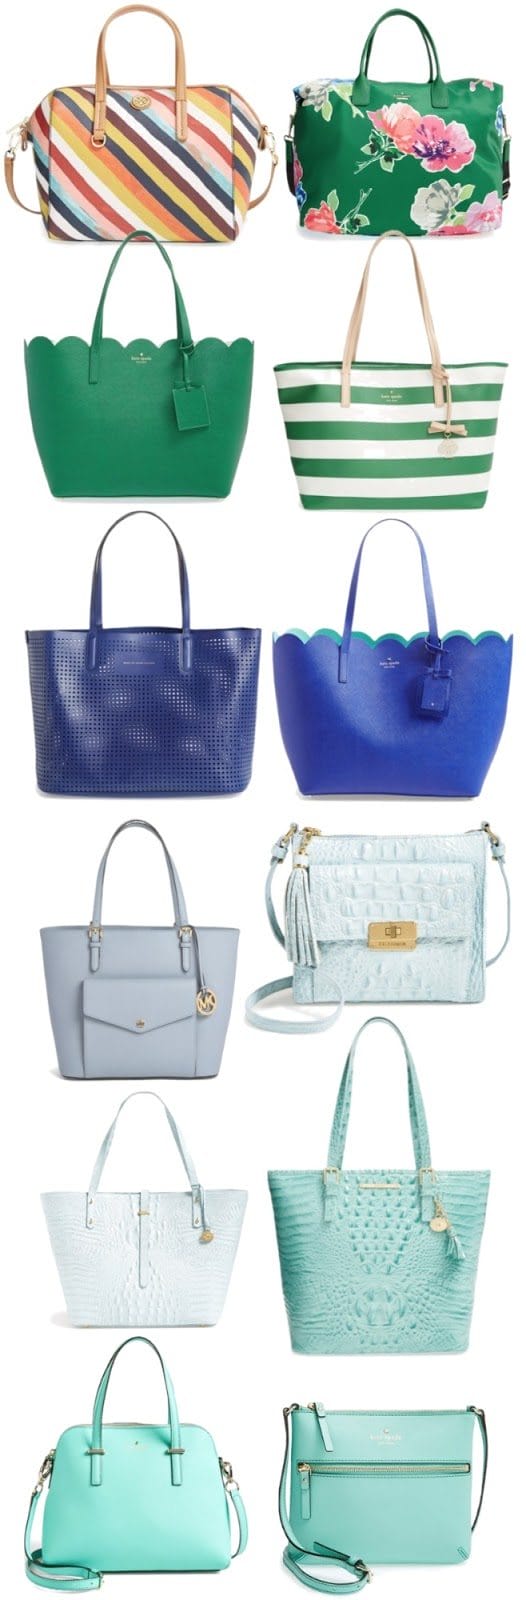 New Colorful Spring Handbags